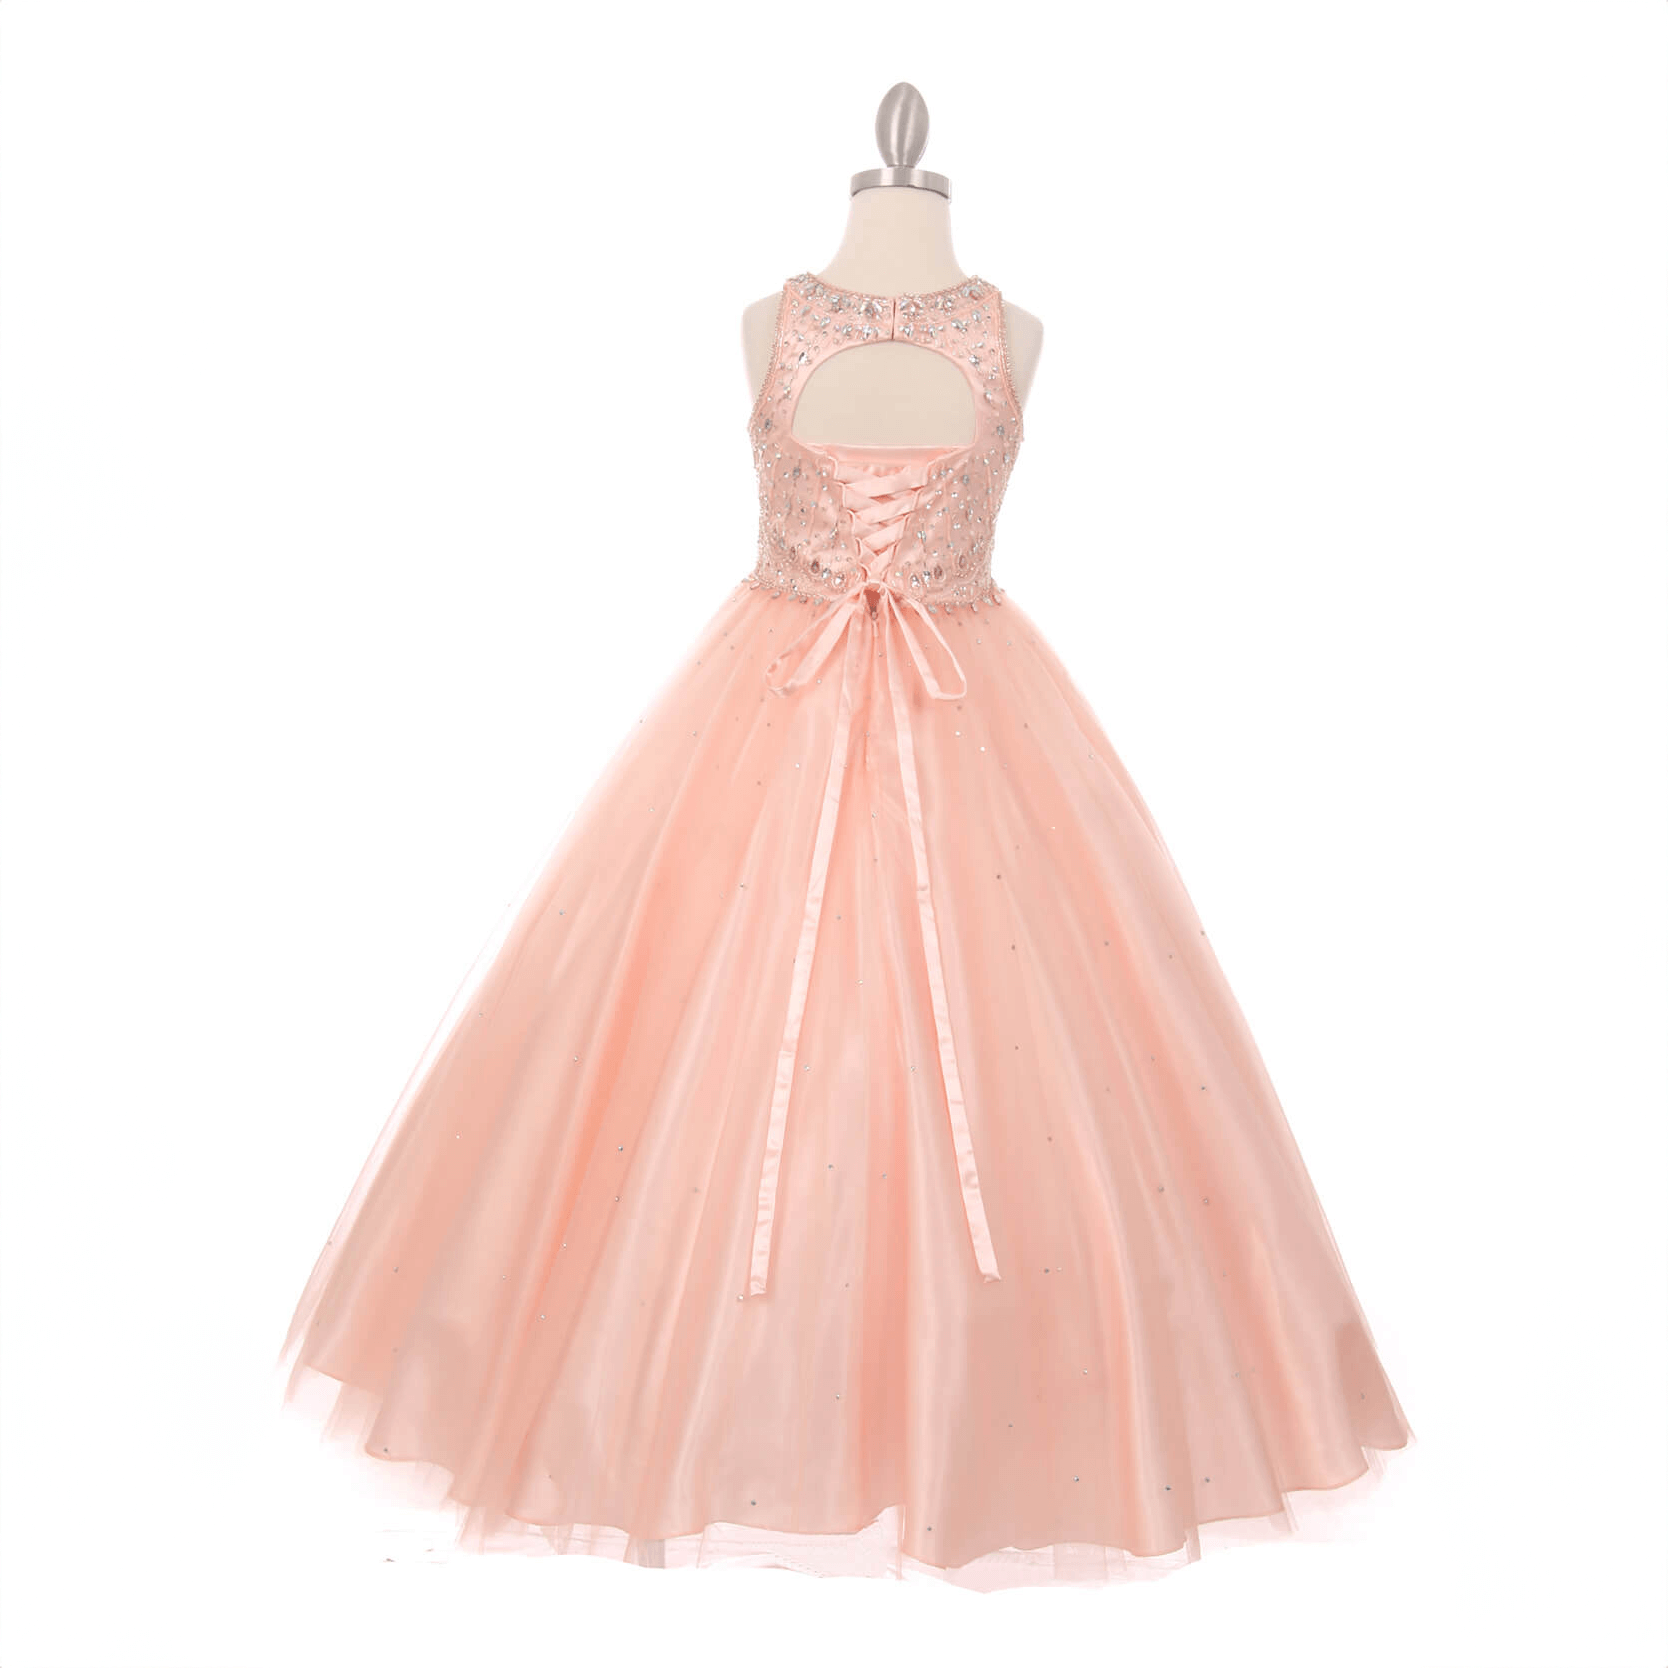 Rear of Blush coloured full length princess-style dress